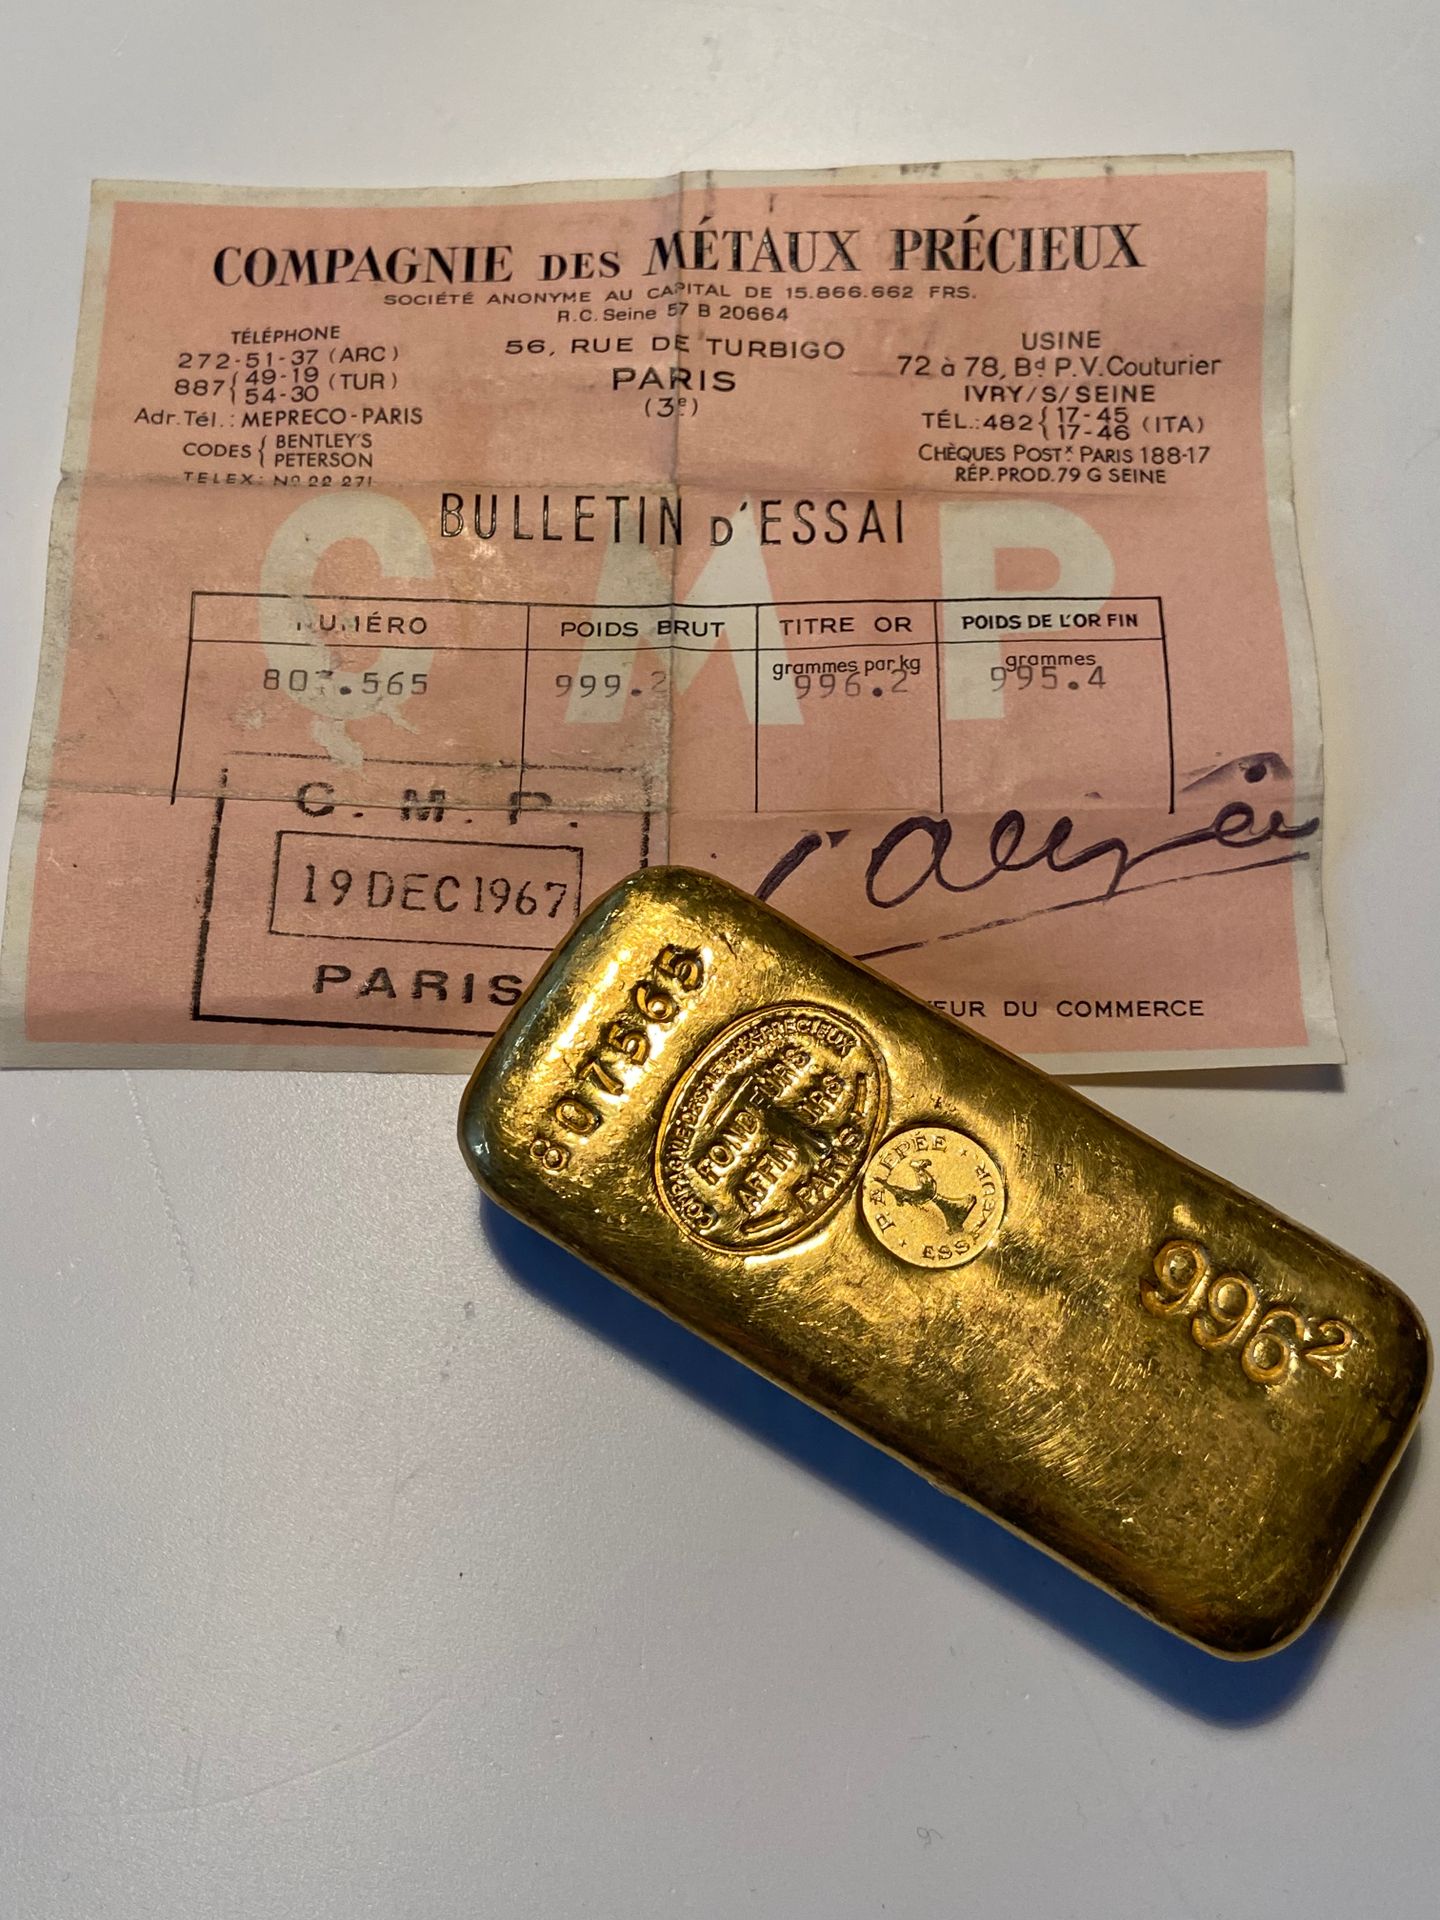 Null 
一根编号为807565，毛重999.2克的金条。
1967年12月19日的Compagnie des métaux précieux证书